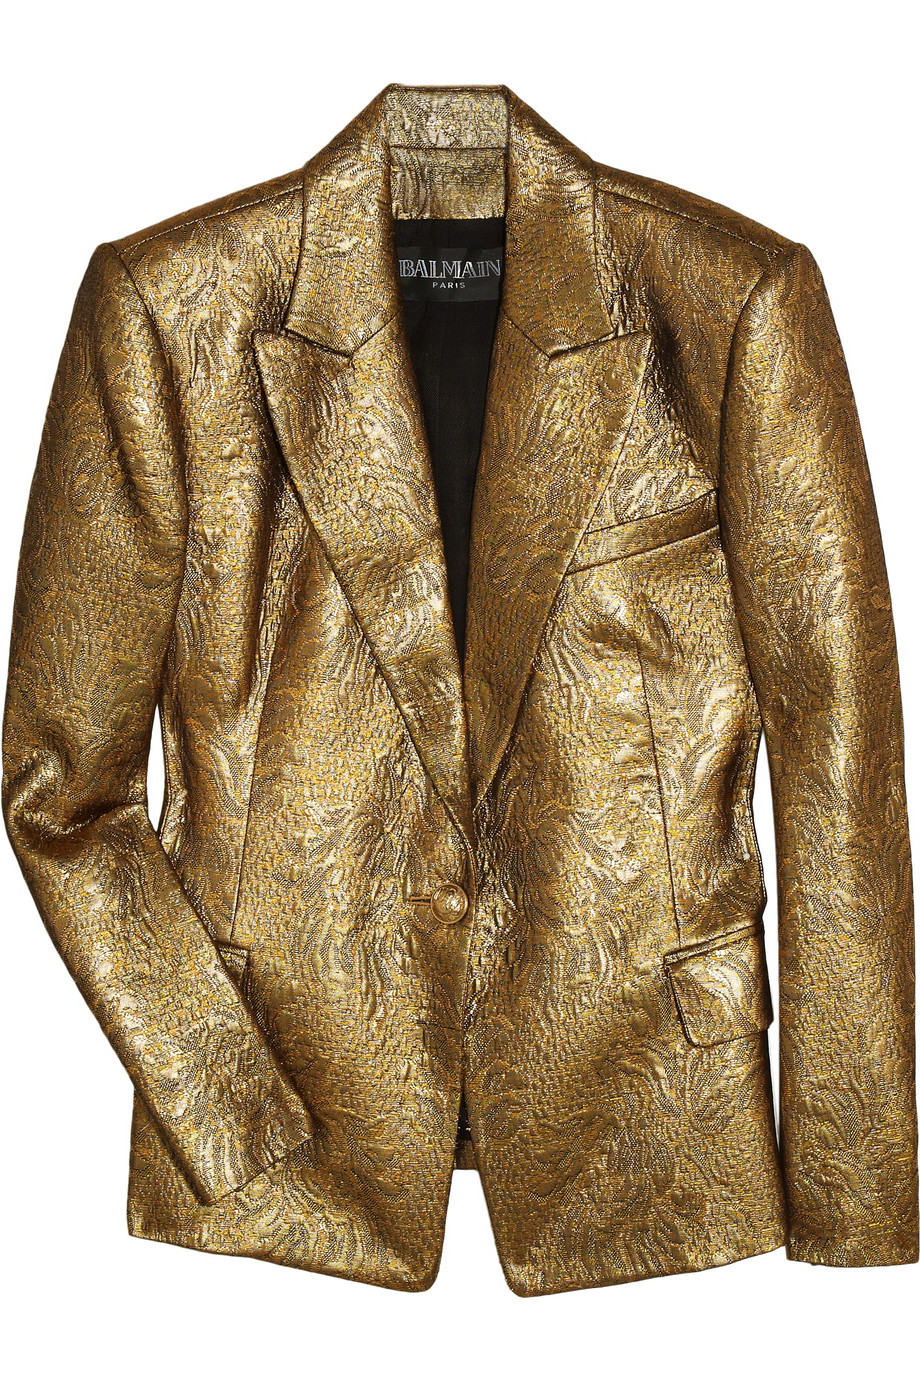 Balmain Metallic Brocade Jacket in Gold | Lyst